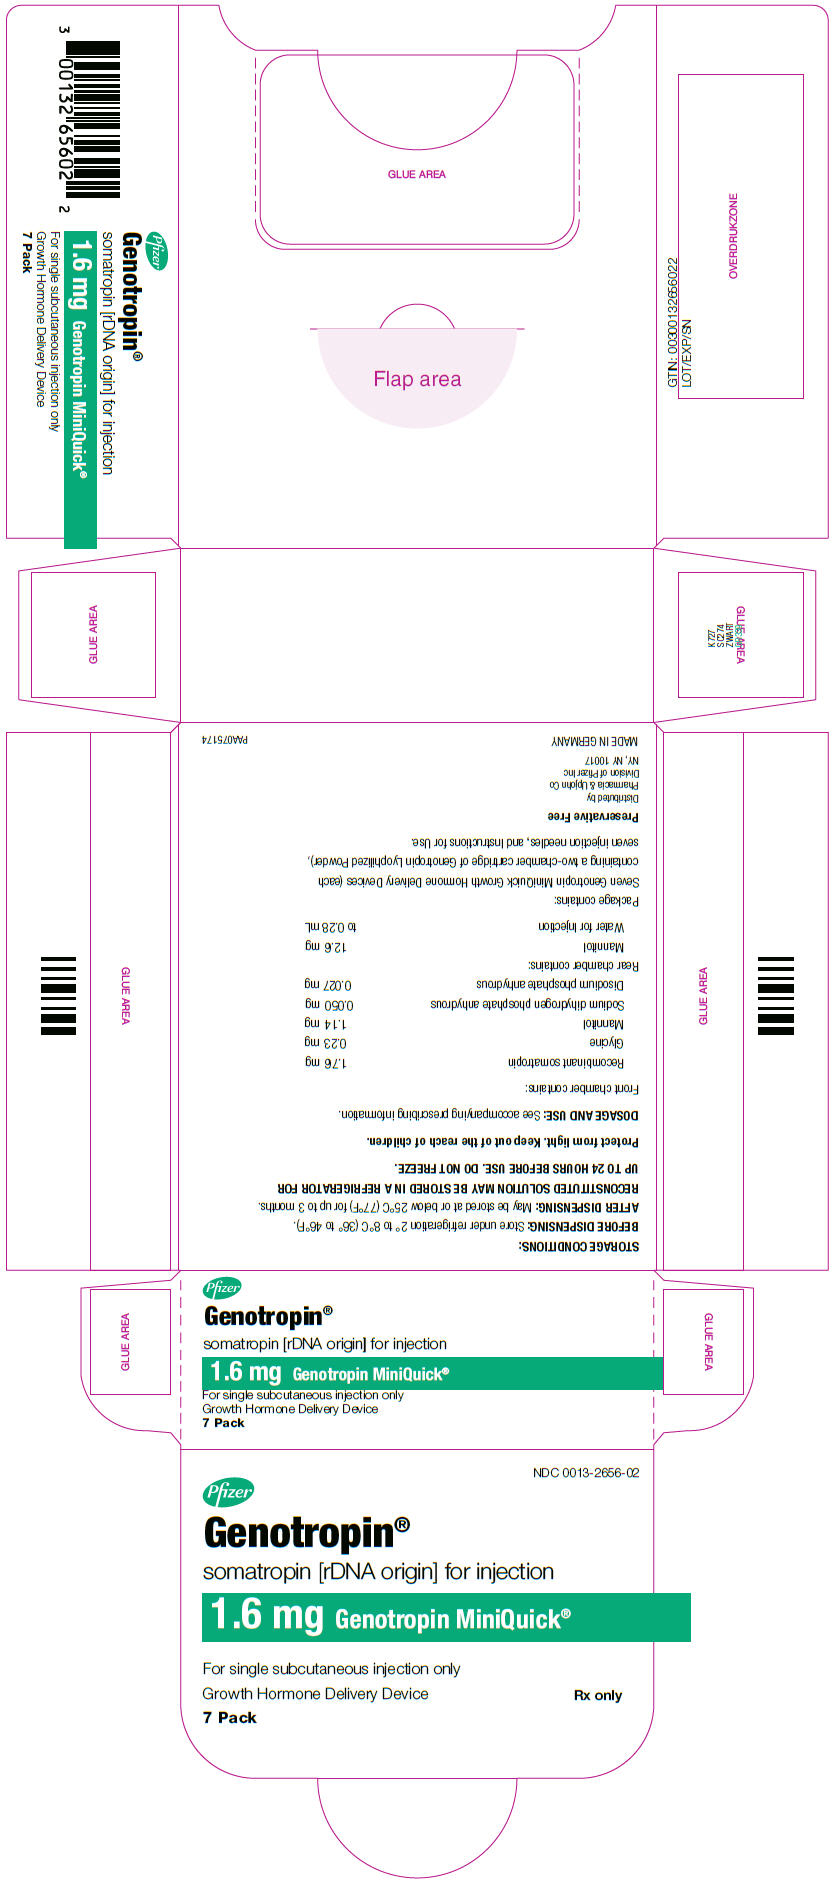 Principal Display Panel - 0.2 mg Cartridge Label